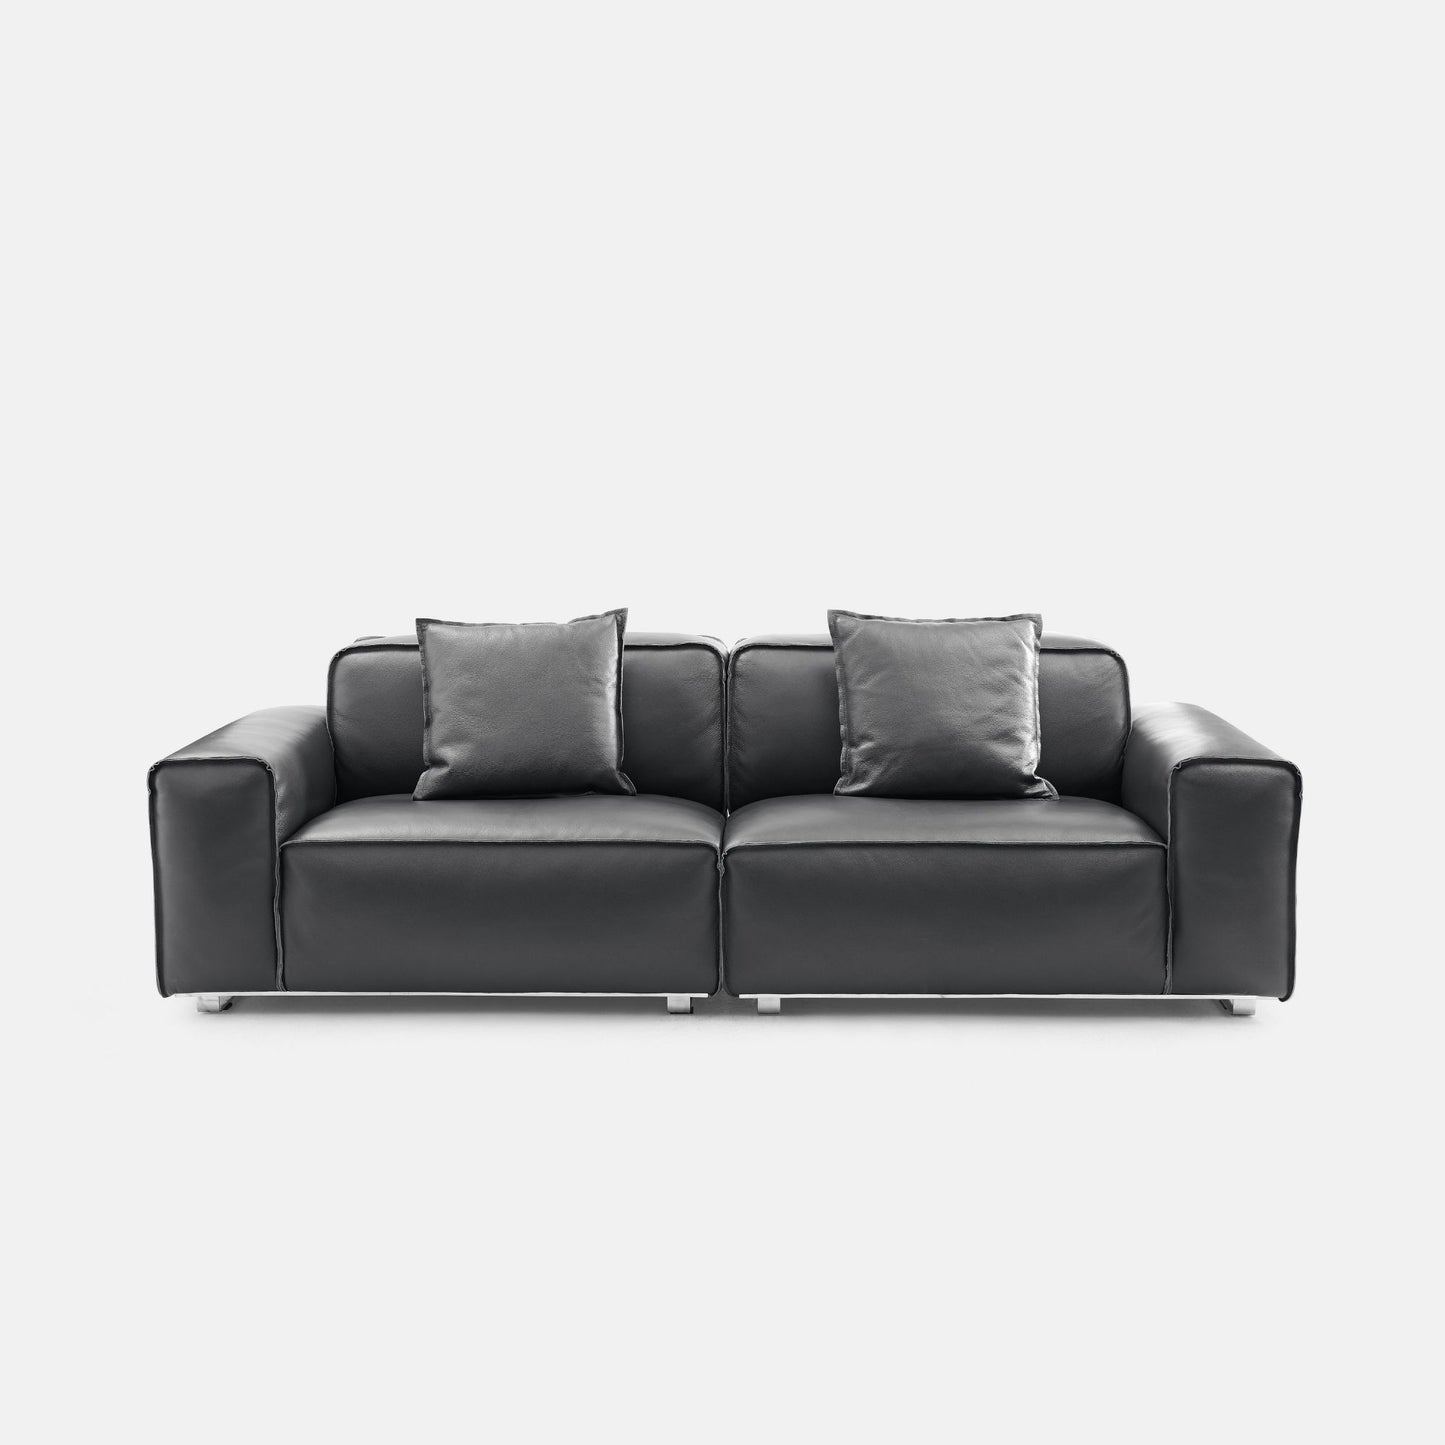 Colby black top grain half leather 2 seat sofa